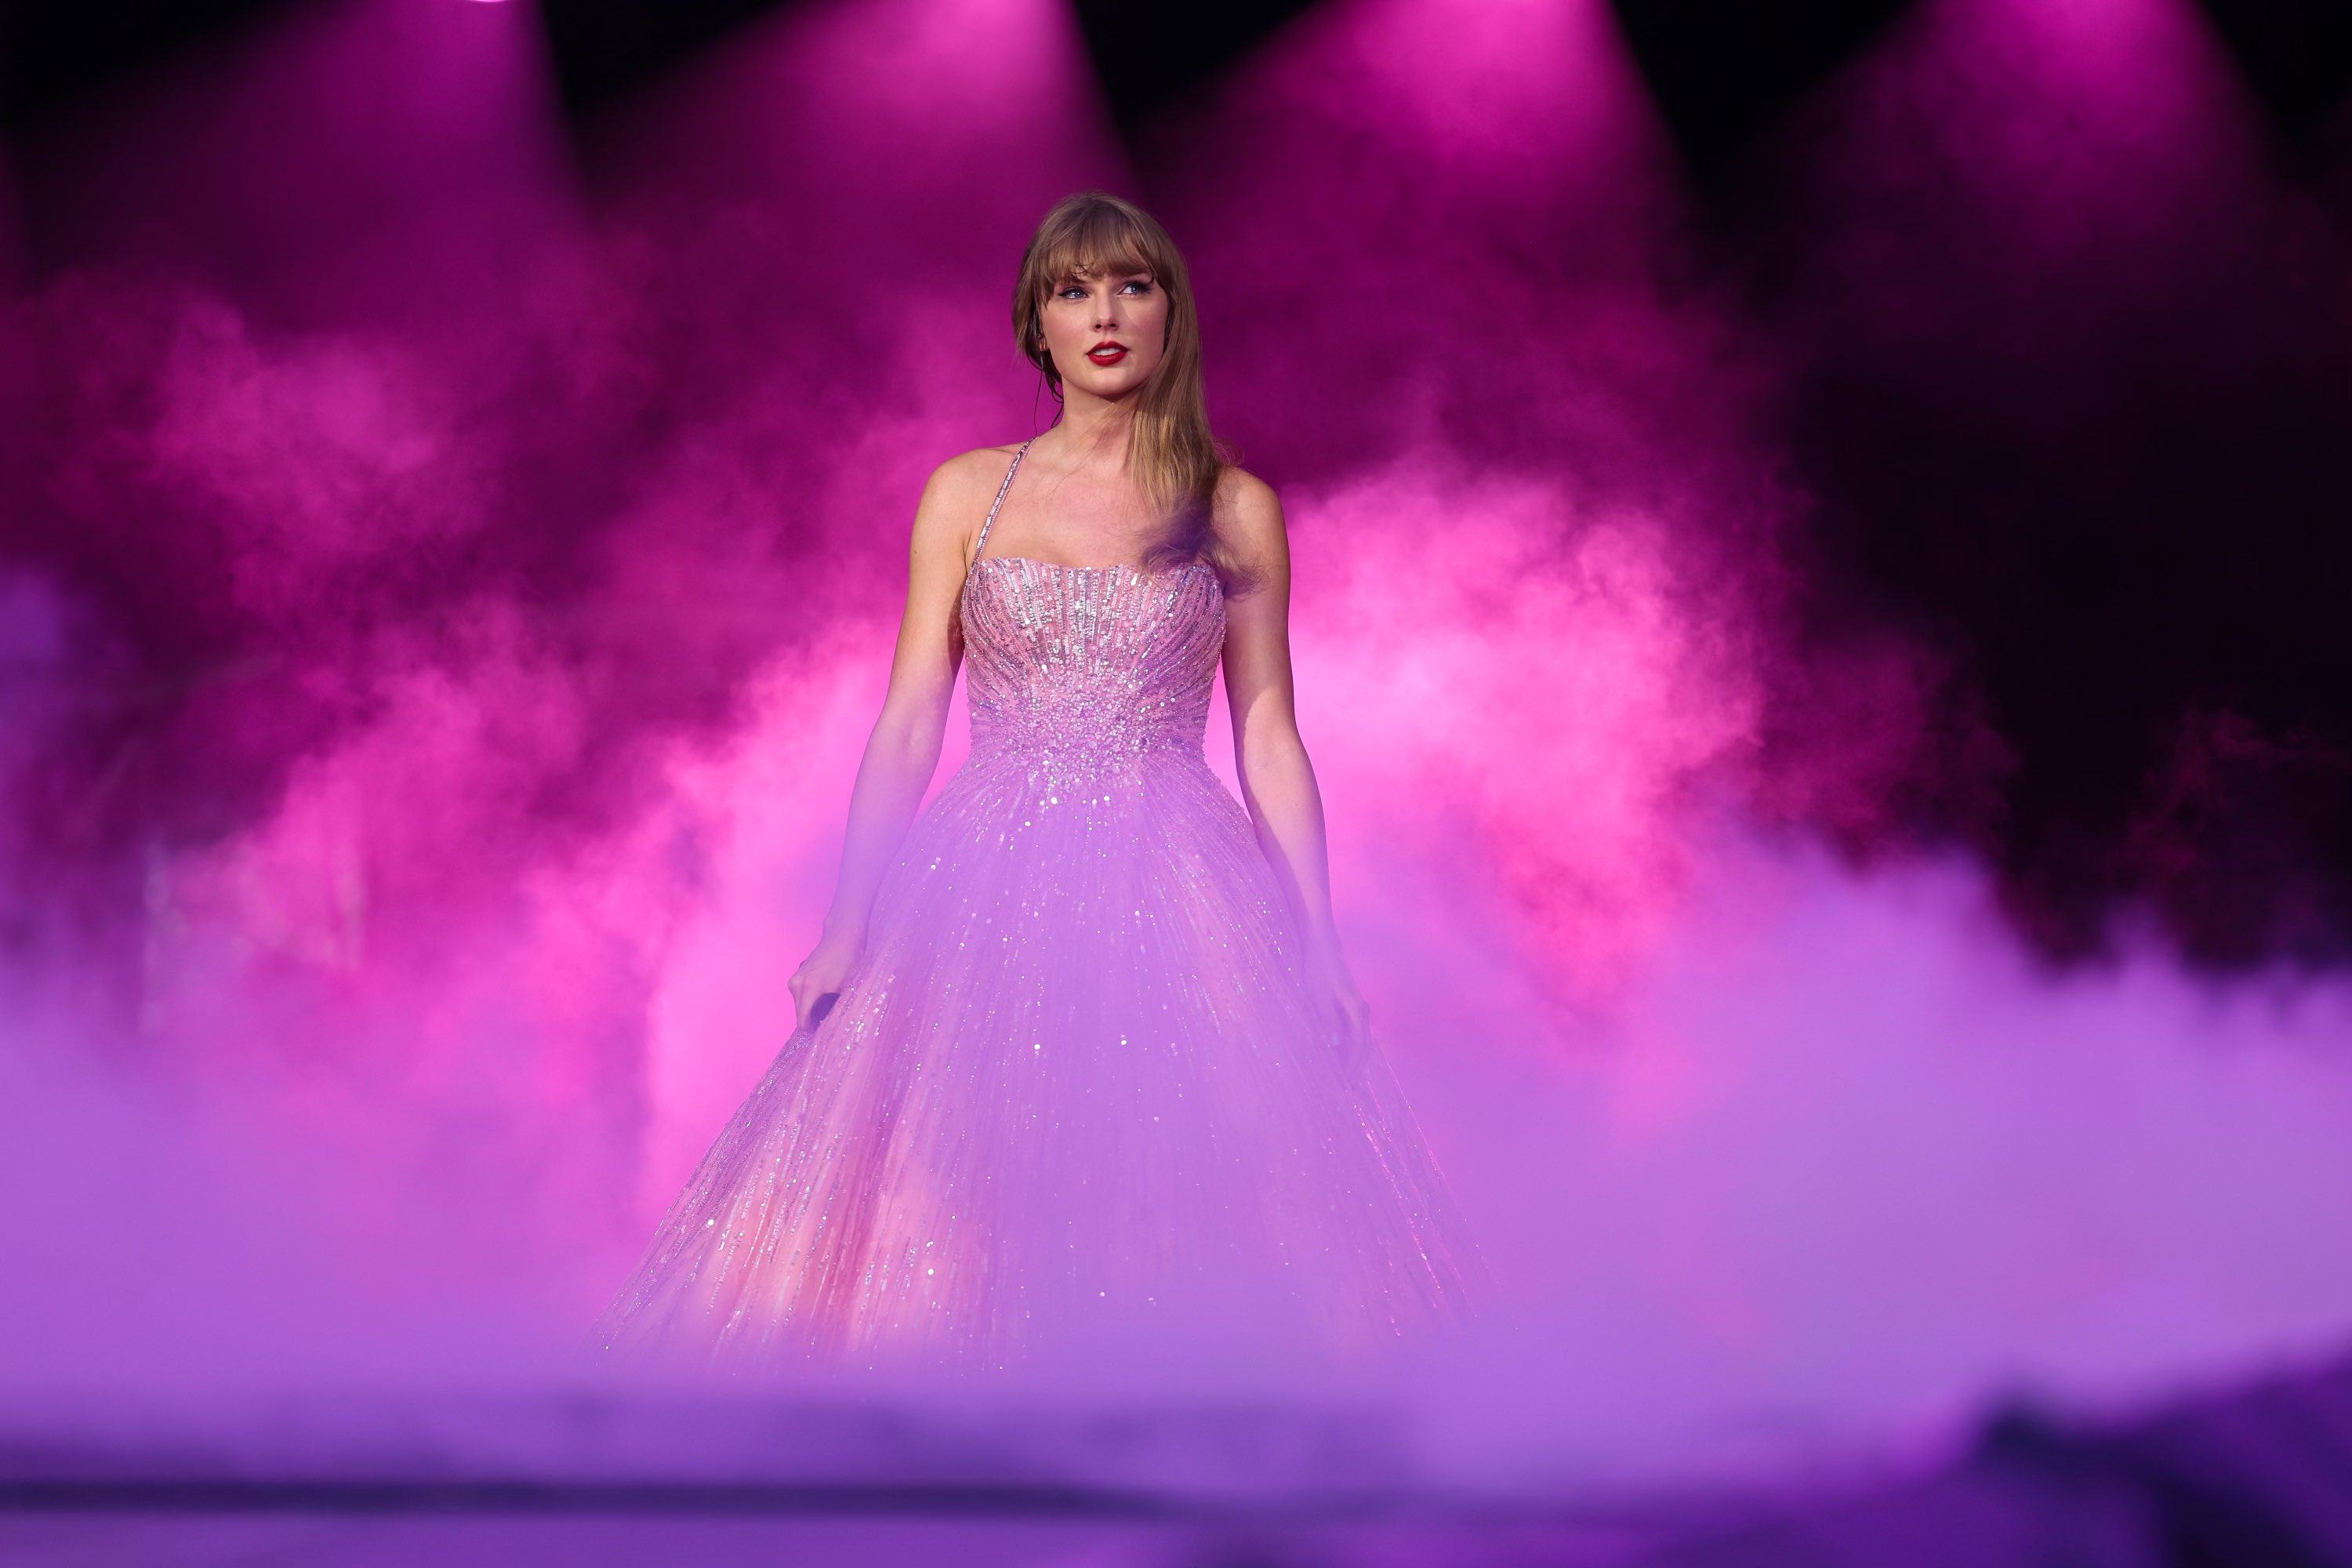 Dress Like Taylor Swift: Leaving a Recording Studio (March 3, 2019